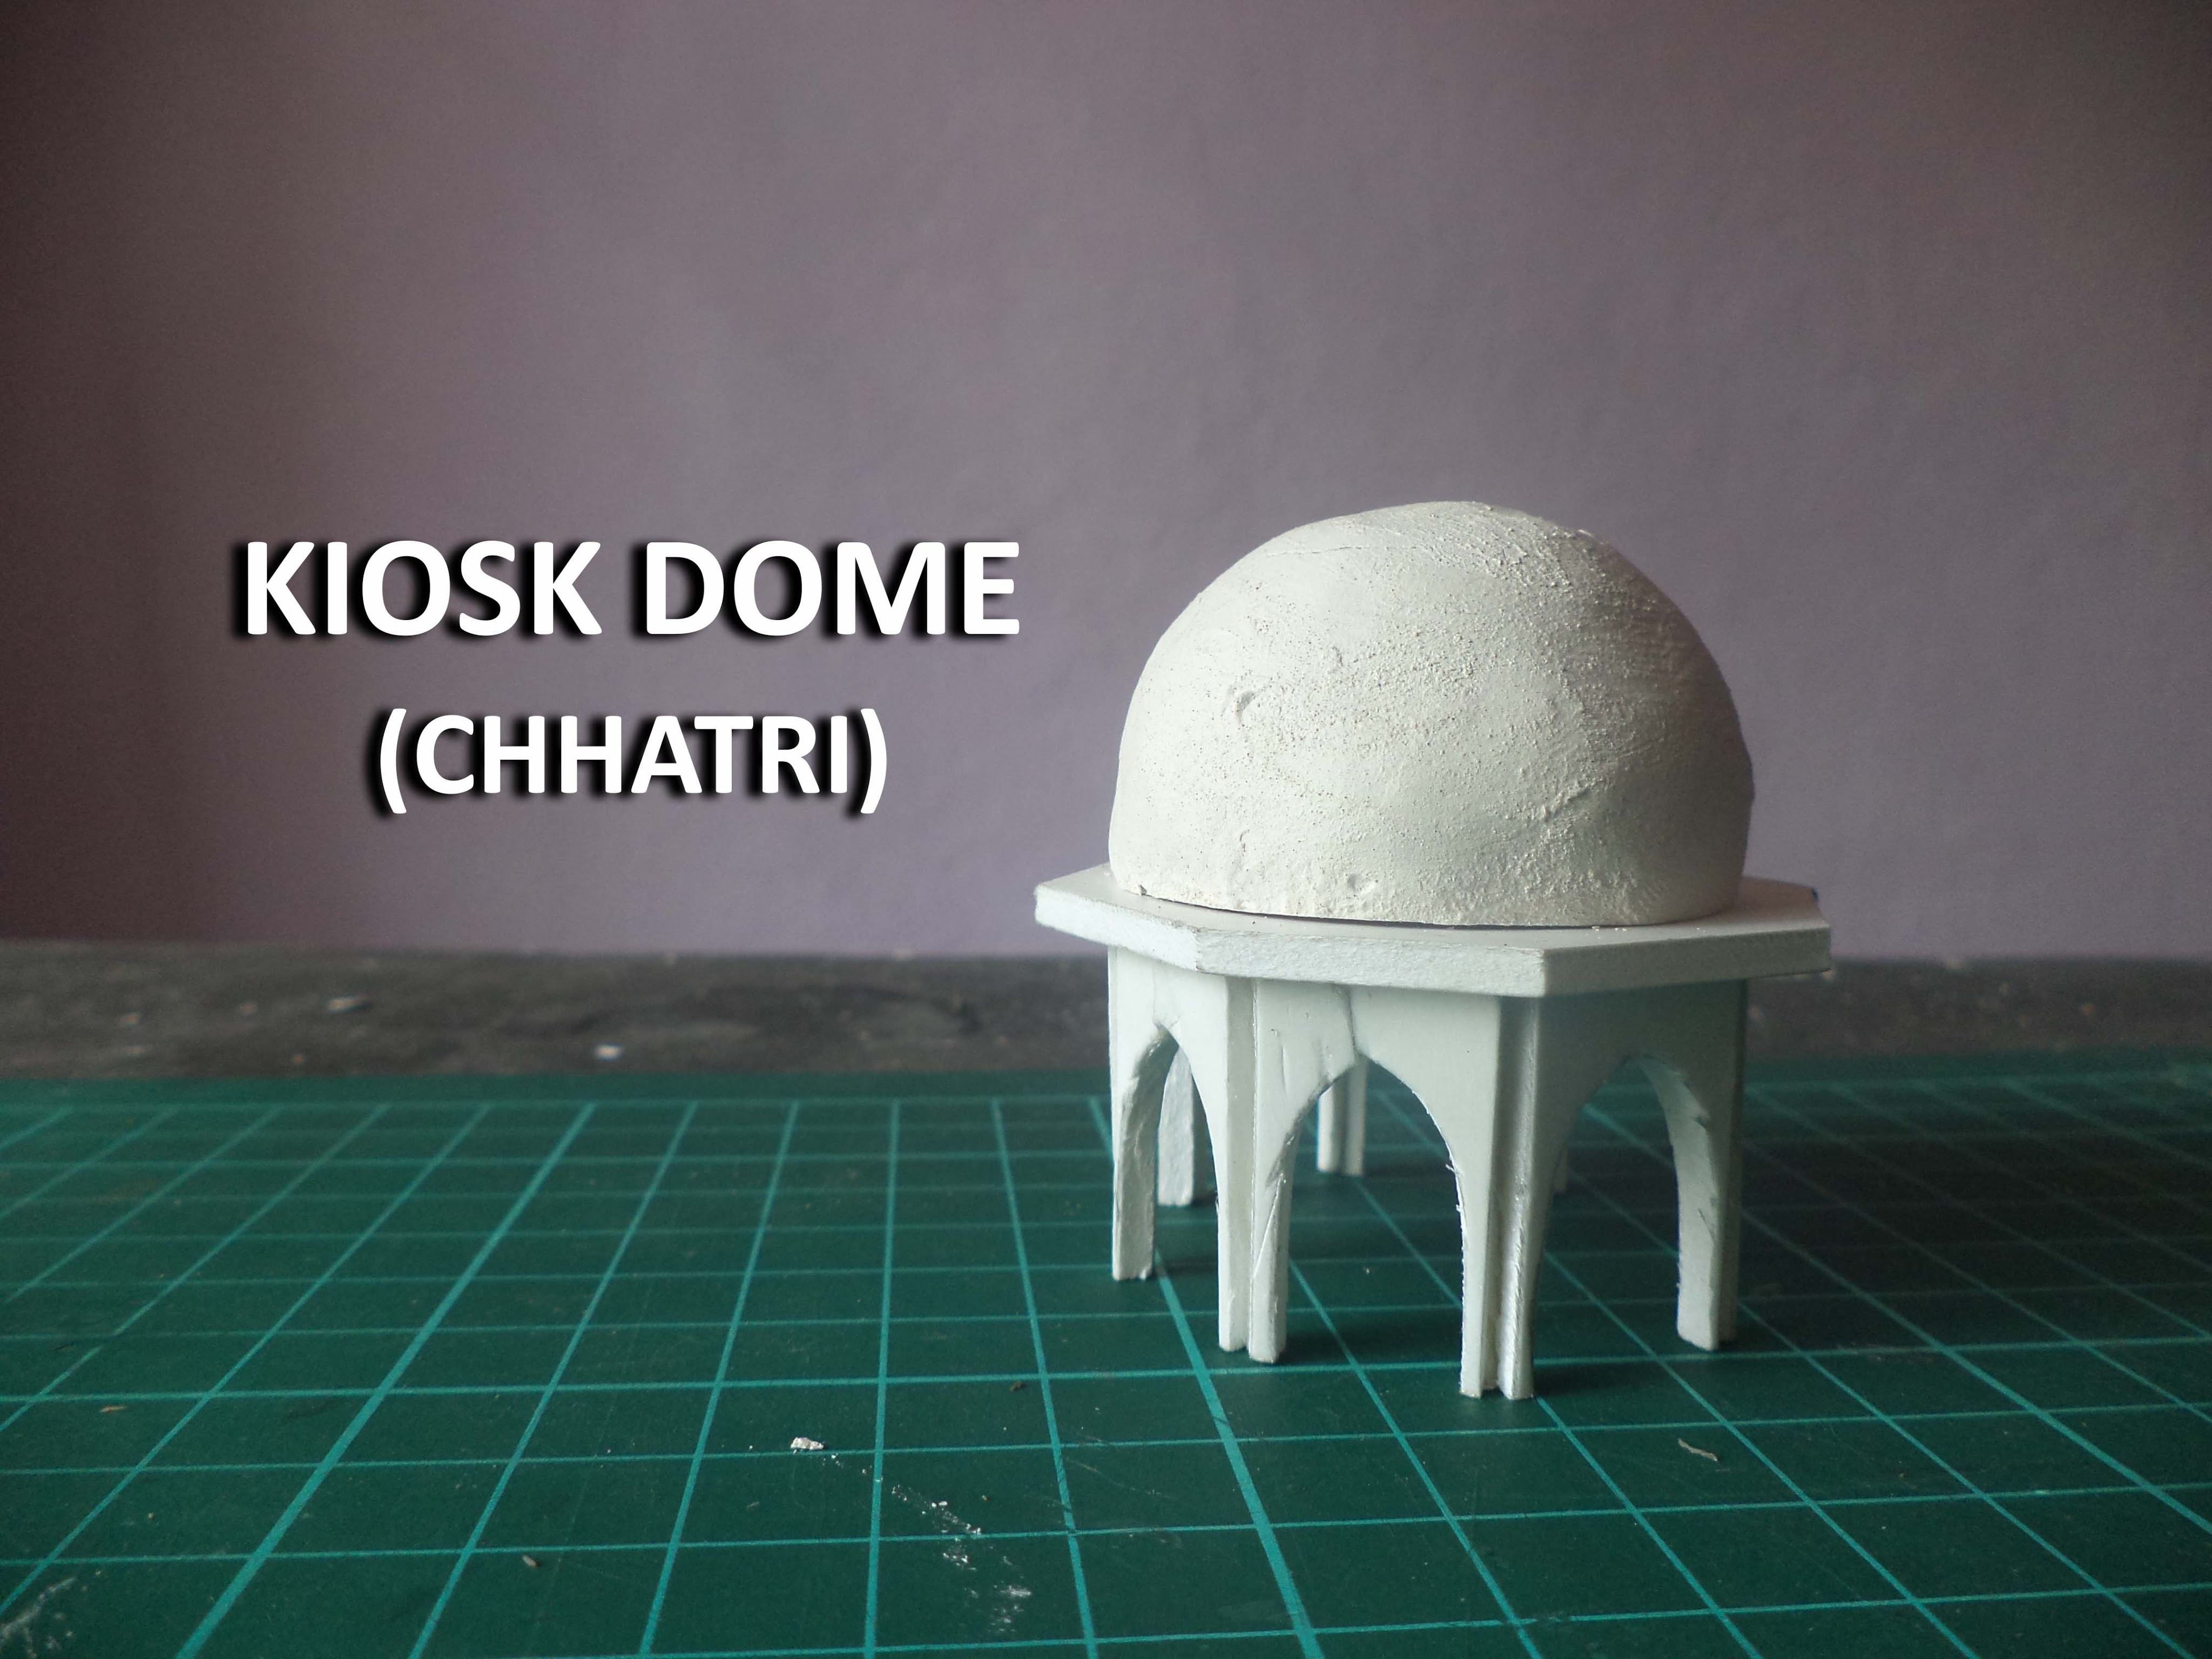 KIOSK DOME (CHHATRI) | How to make a model of Taj Mahal | Architecture Model Making